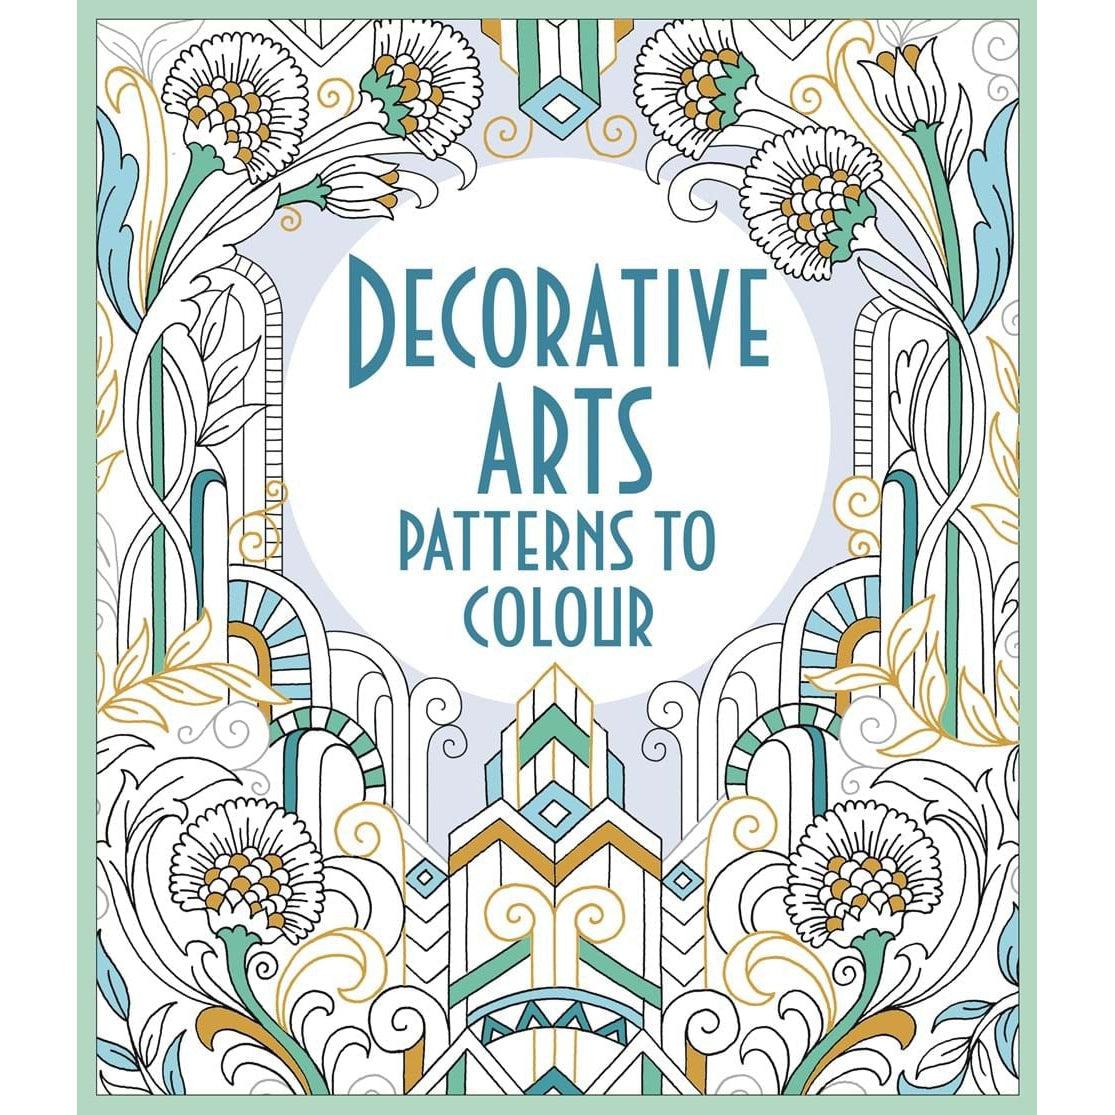 Decorative Arts Patterns To Colour